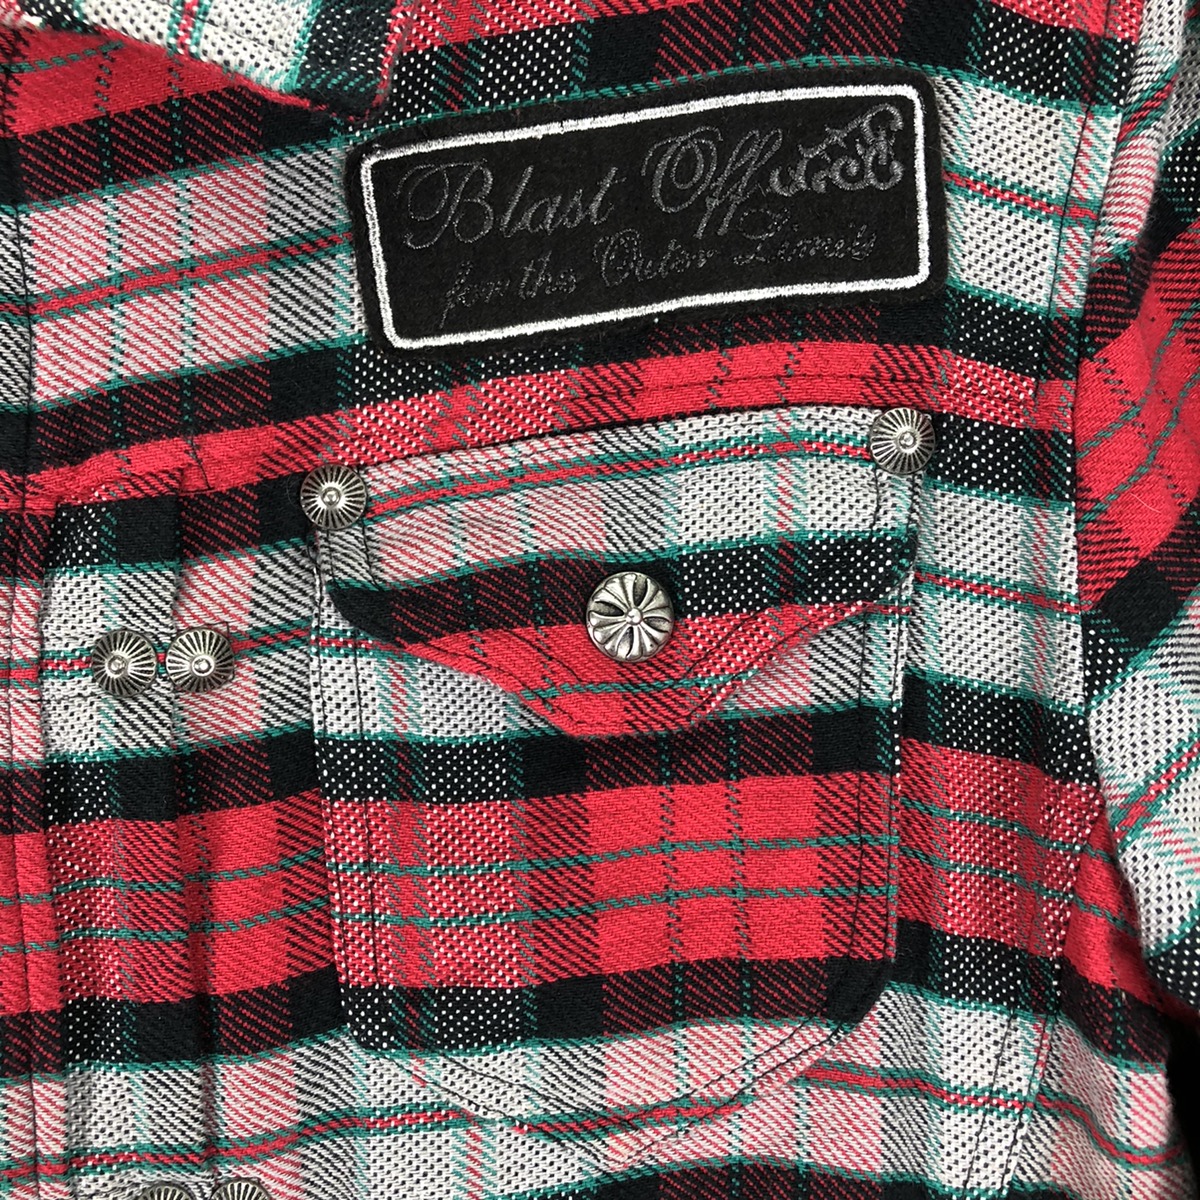 Japanese Brand - Vintage Flannel Checkered Jacket Chrome Heart Style Design - 13